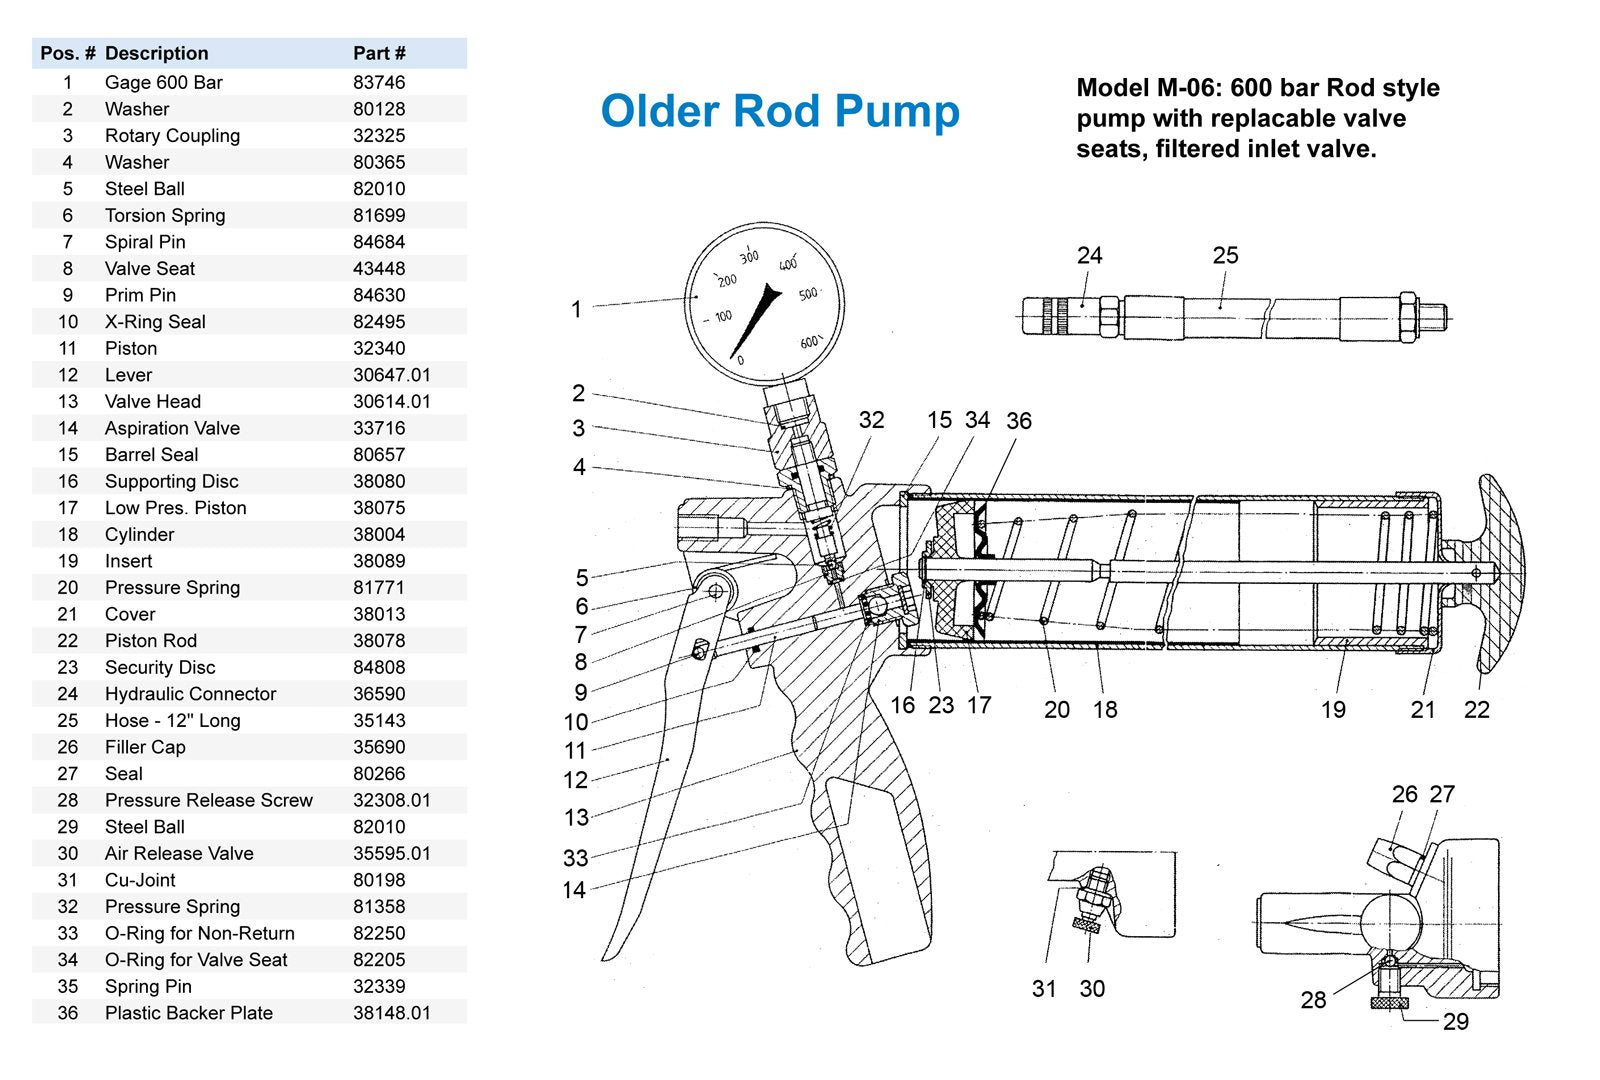 Hydraulic Connector - 36590 -- Abnox-Wanner Grease Pump Part